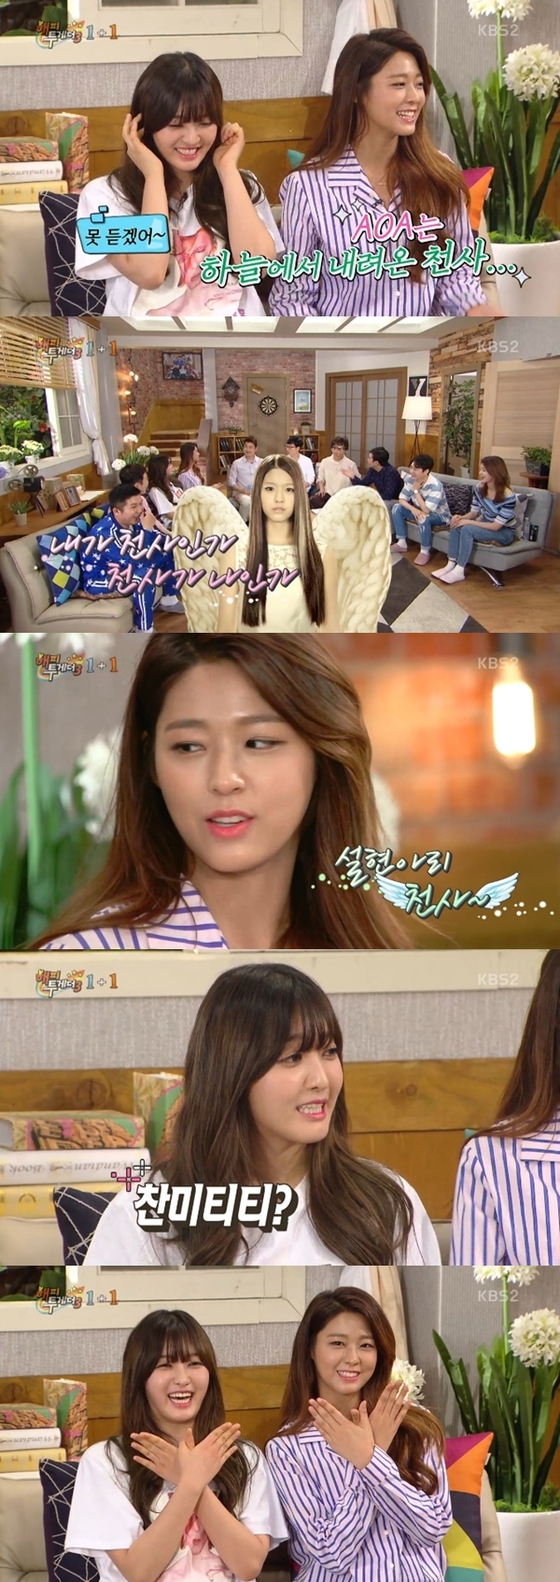 AOA 설현이 천사 이름에 대해 밝혔다. © News1star / KBS2 '해피투게더3' 캡처